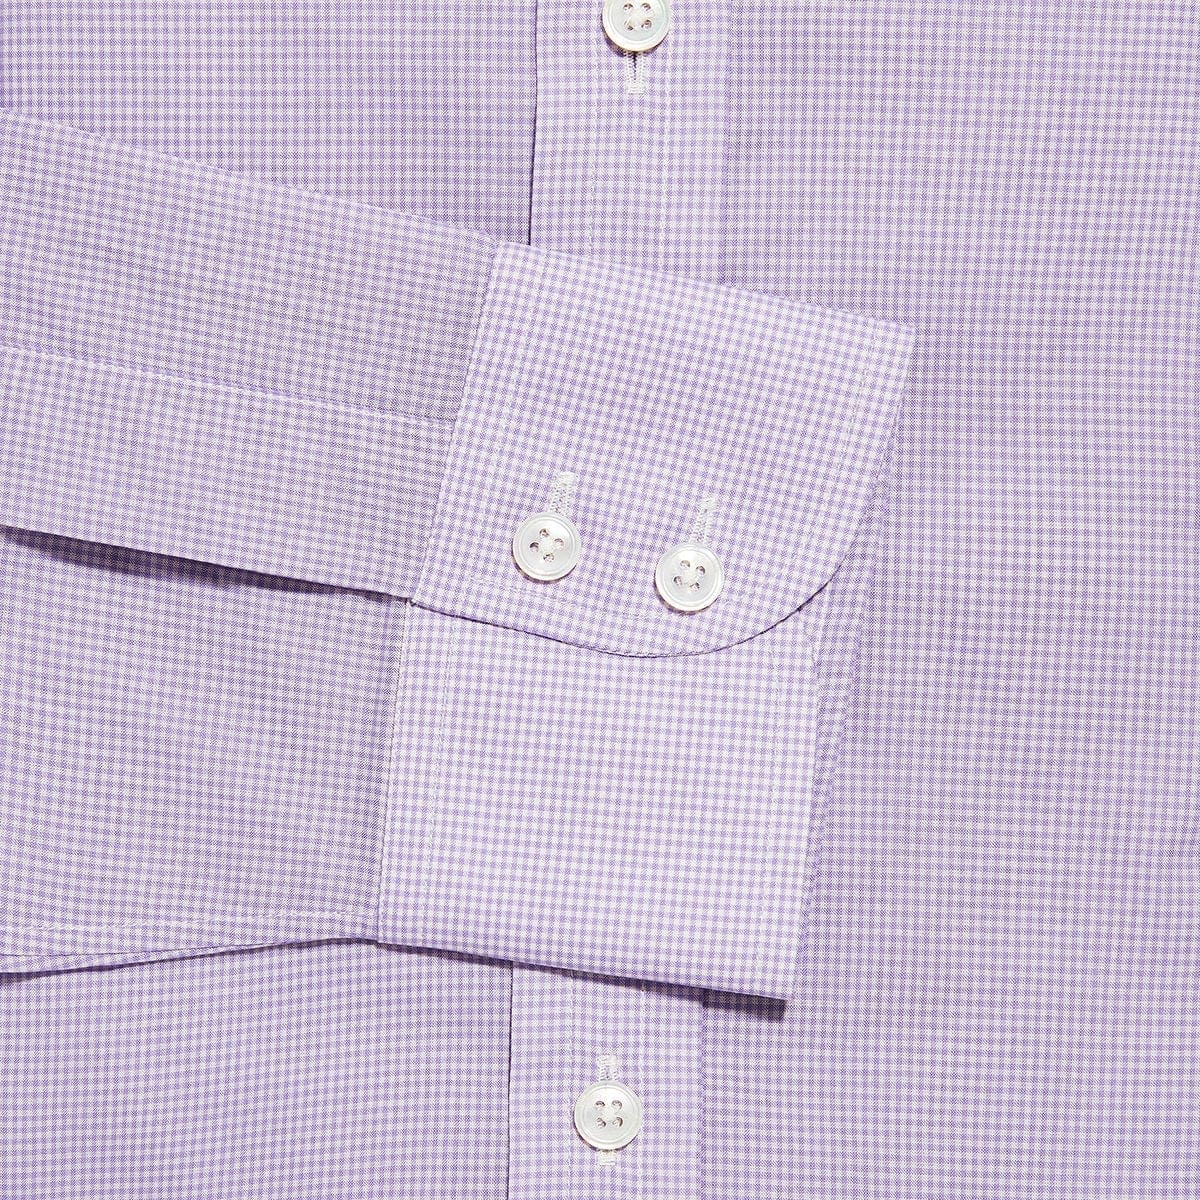 Contemporary Fit, Classic Collar, 2 Button Cuff Shirt in a Lilac & White Check Twill Cotton